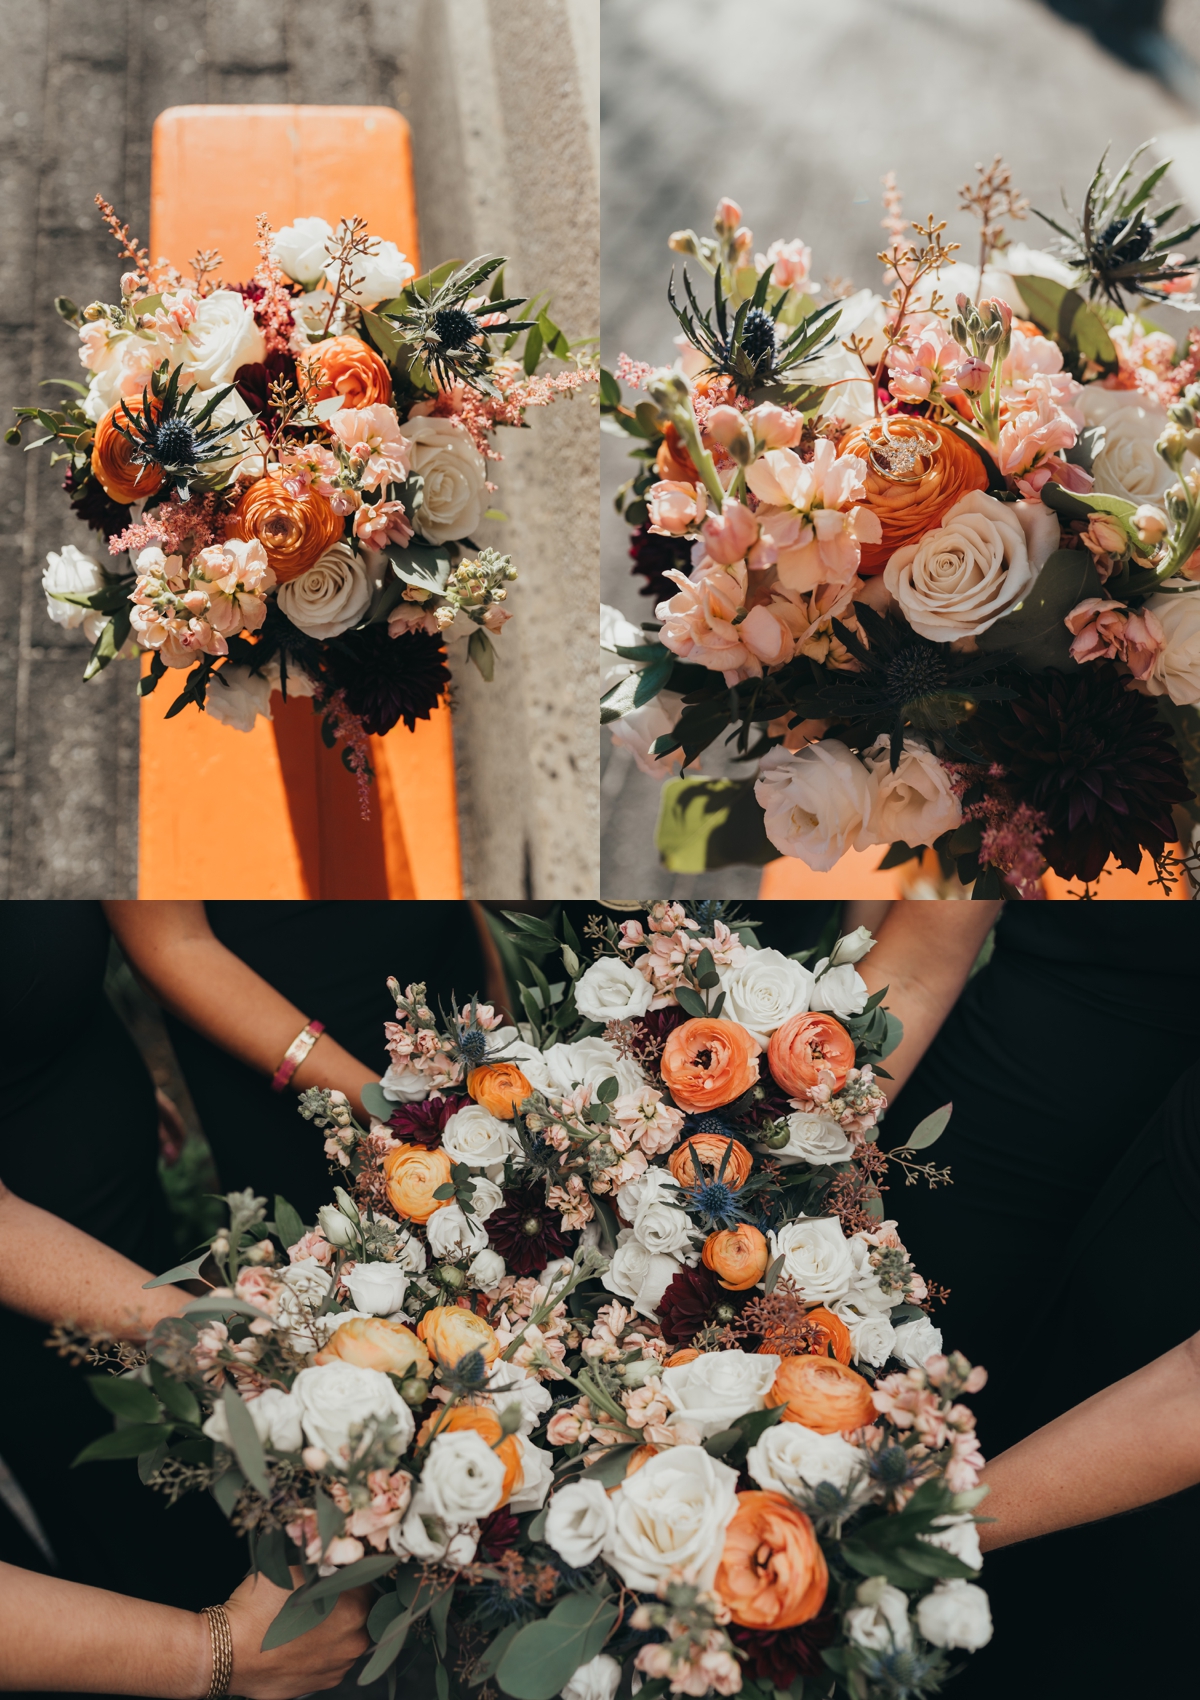 Wedding bouquets with orange ranunculus, white roses and burgundy dahlias